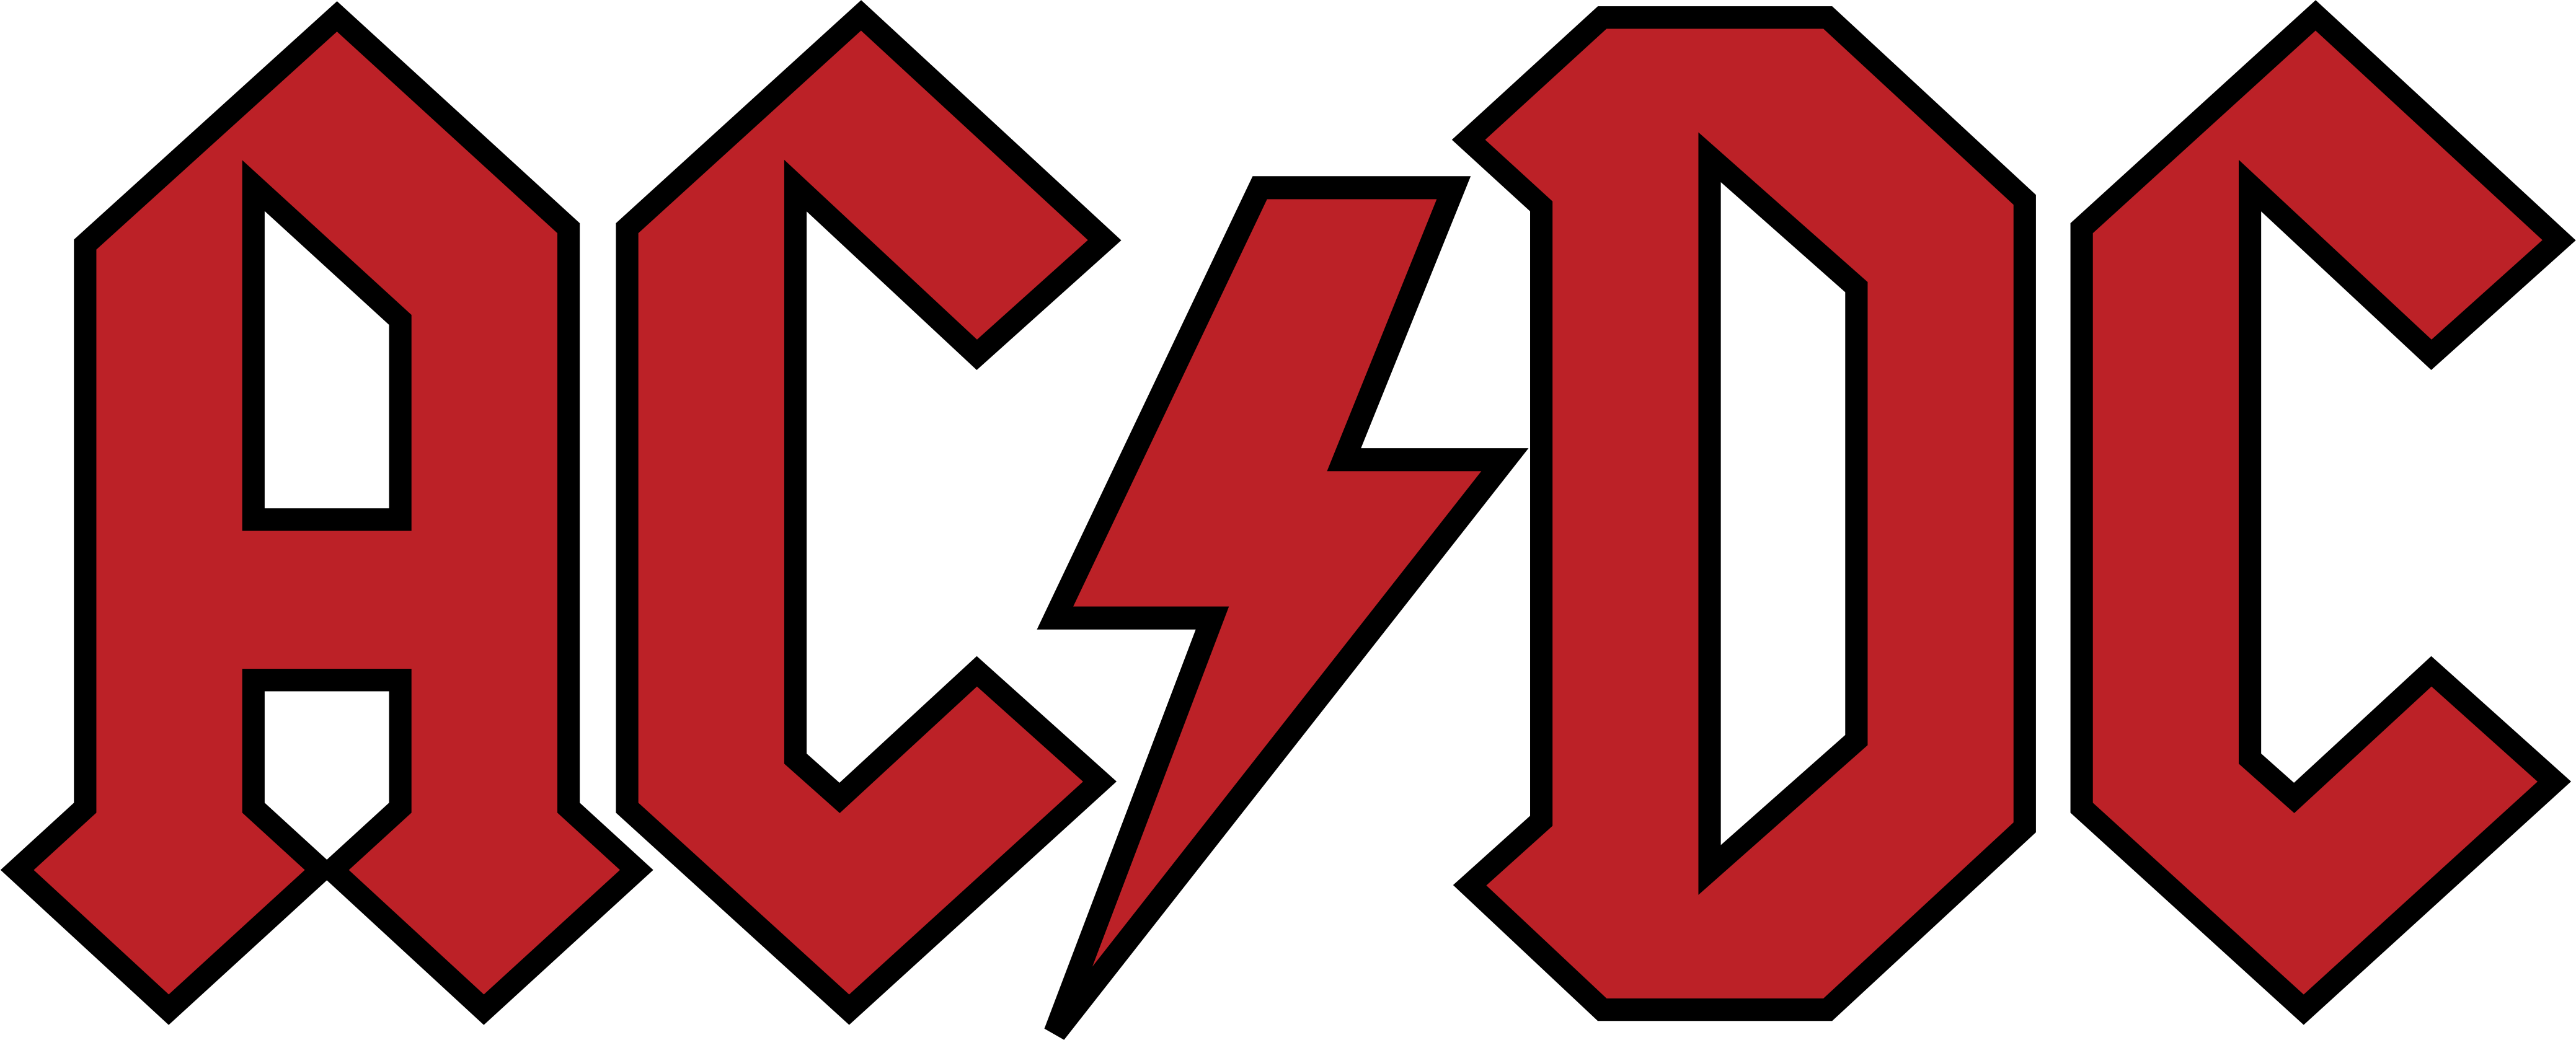 AC_DC_logo red black